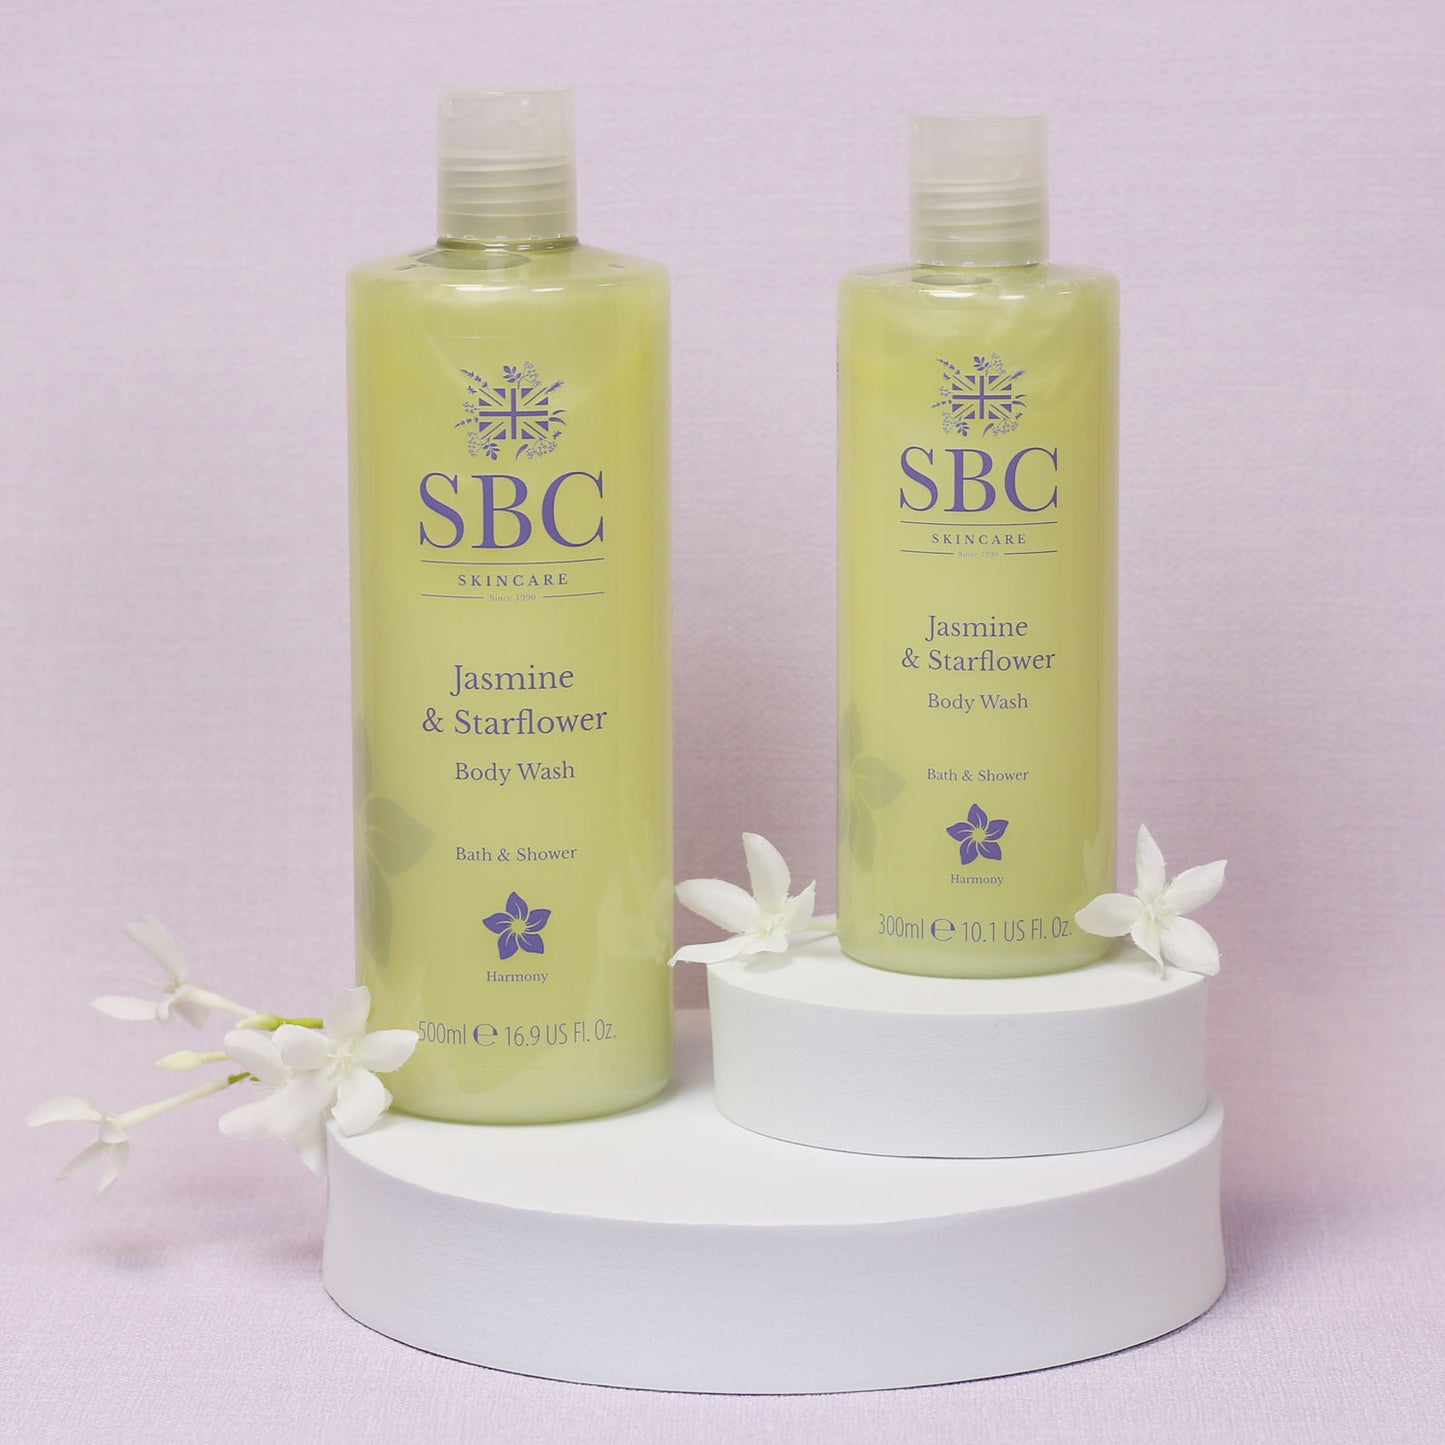 300ml and 500ml SBC Jasmine & Starflower Body Wash on white platforms with jasmine flowers